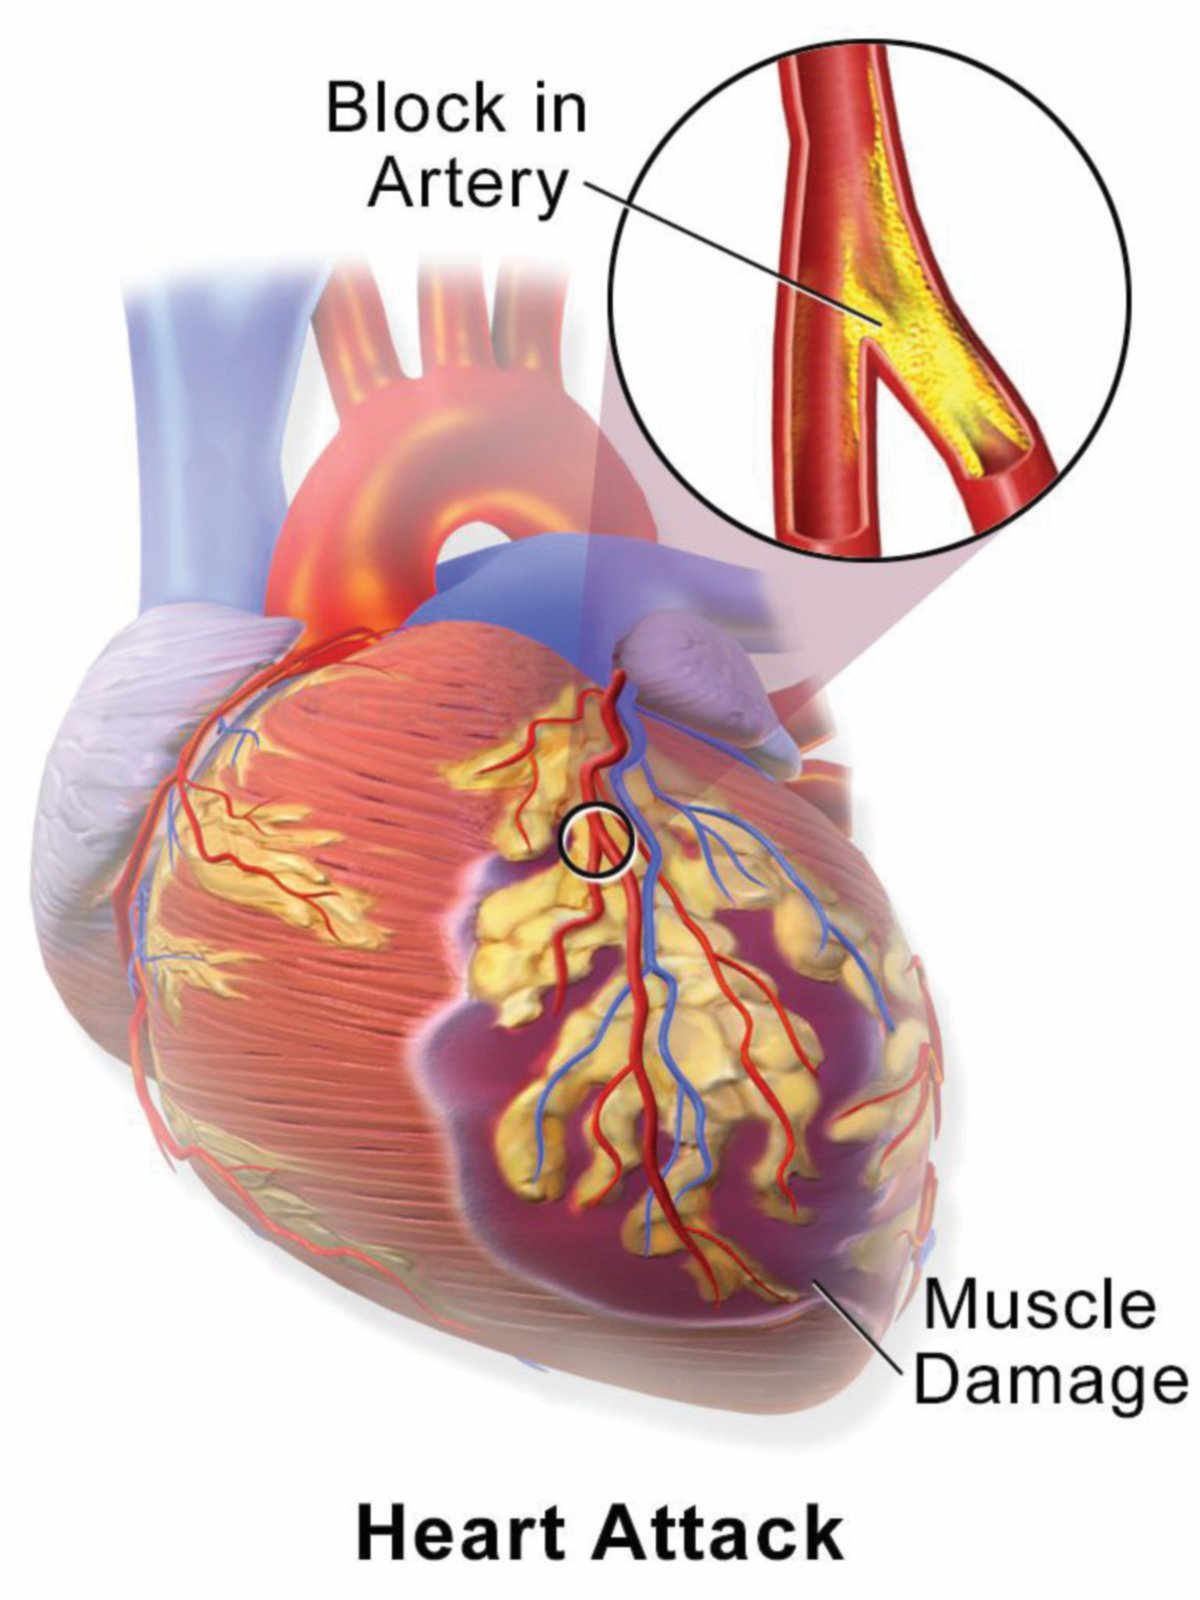 SALUR darah jantung (salur darah koronari) yang tersumbat dan berlaku secara tiba-tiba menyebabkan serangan jantung. 